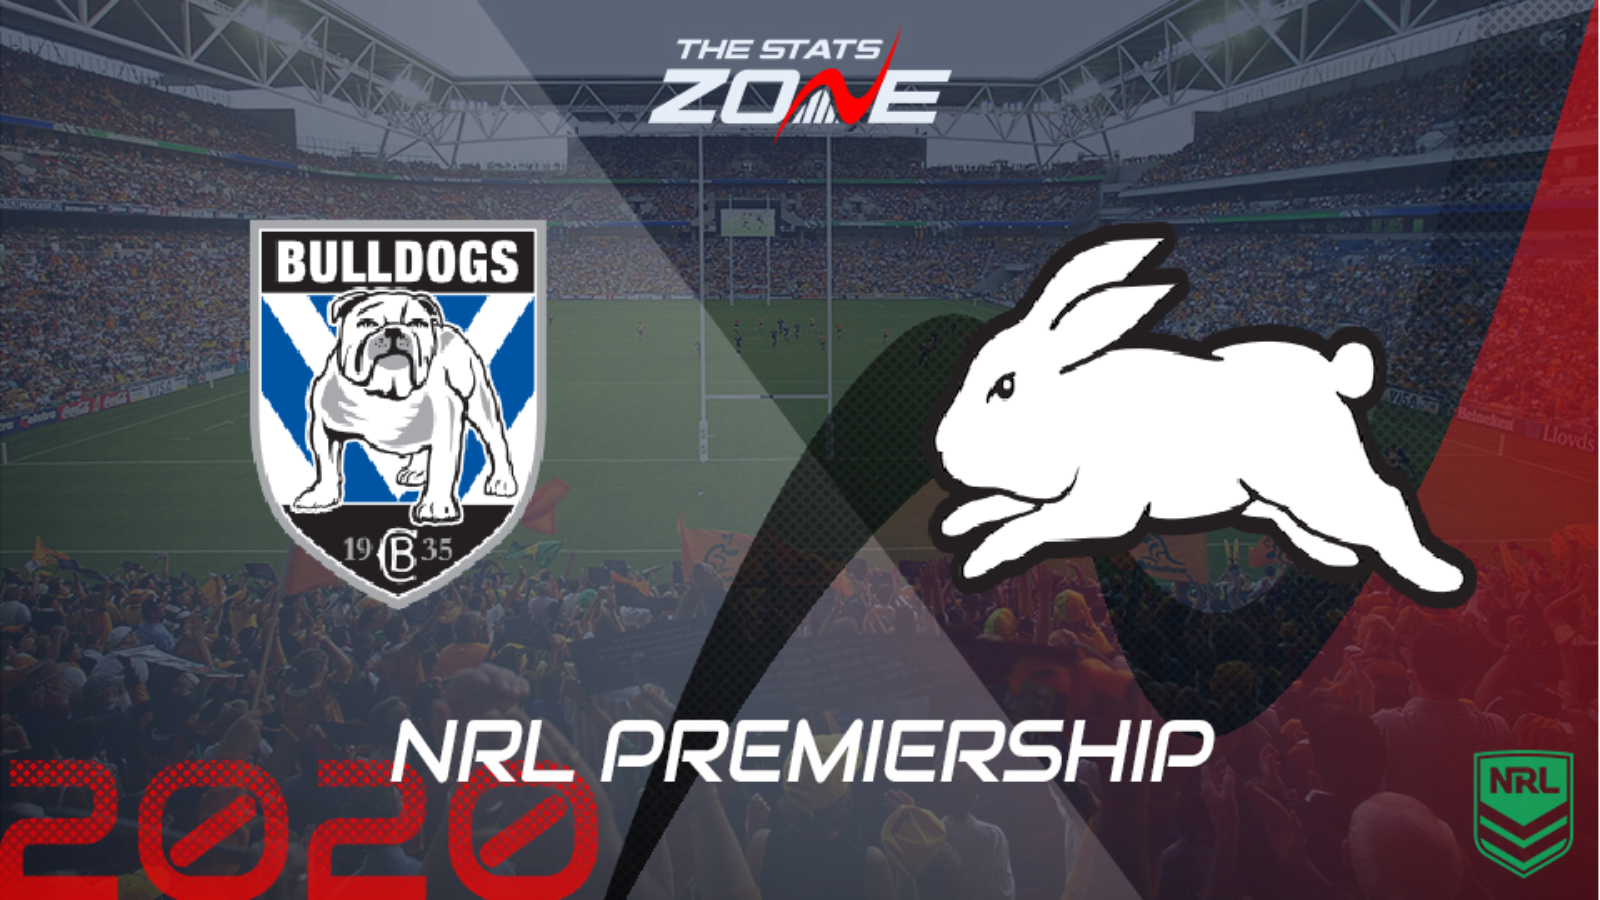 2020 Nrl Canterbury Bulldogs Vs South Sydney Rabbitohs Preview Prediction The Stats Zone